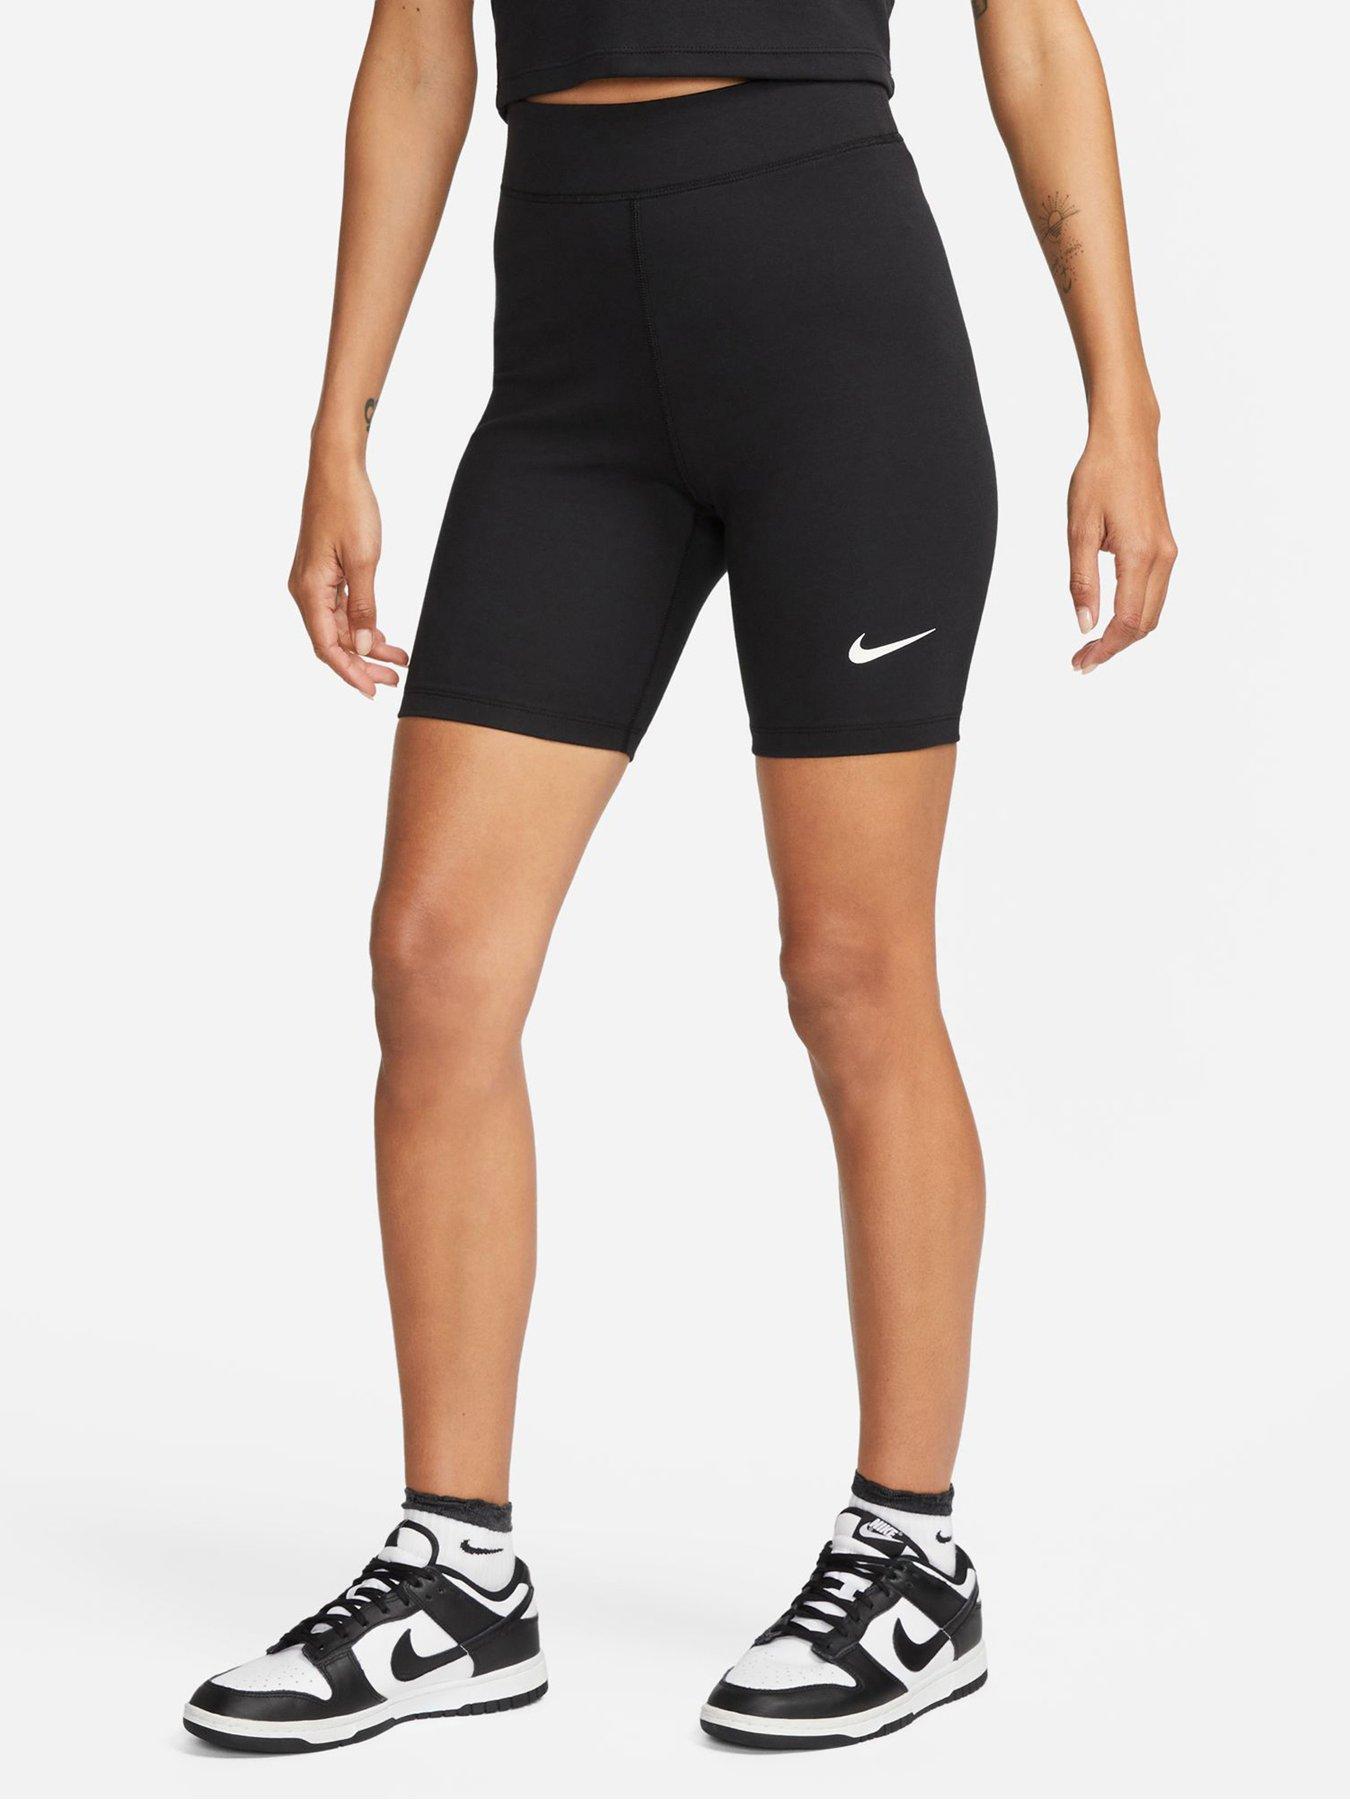 Women's Nike Shorts, Nike Pro Shorts